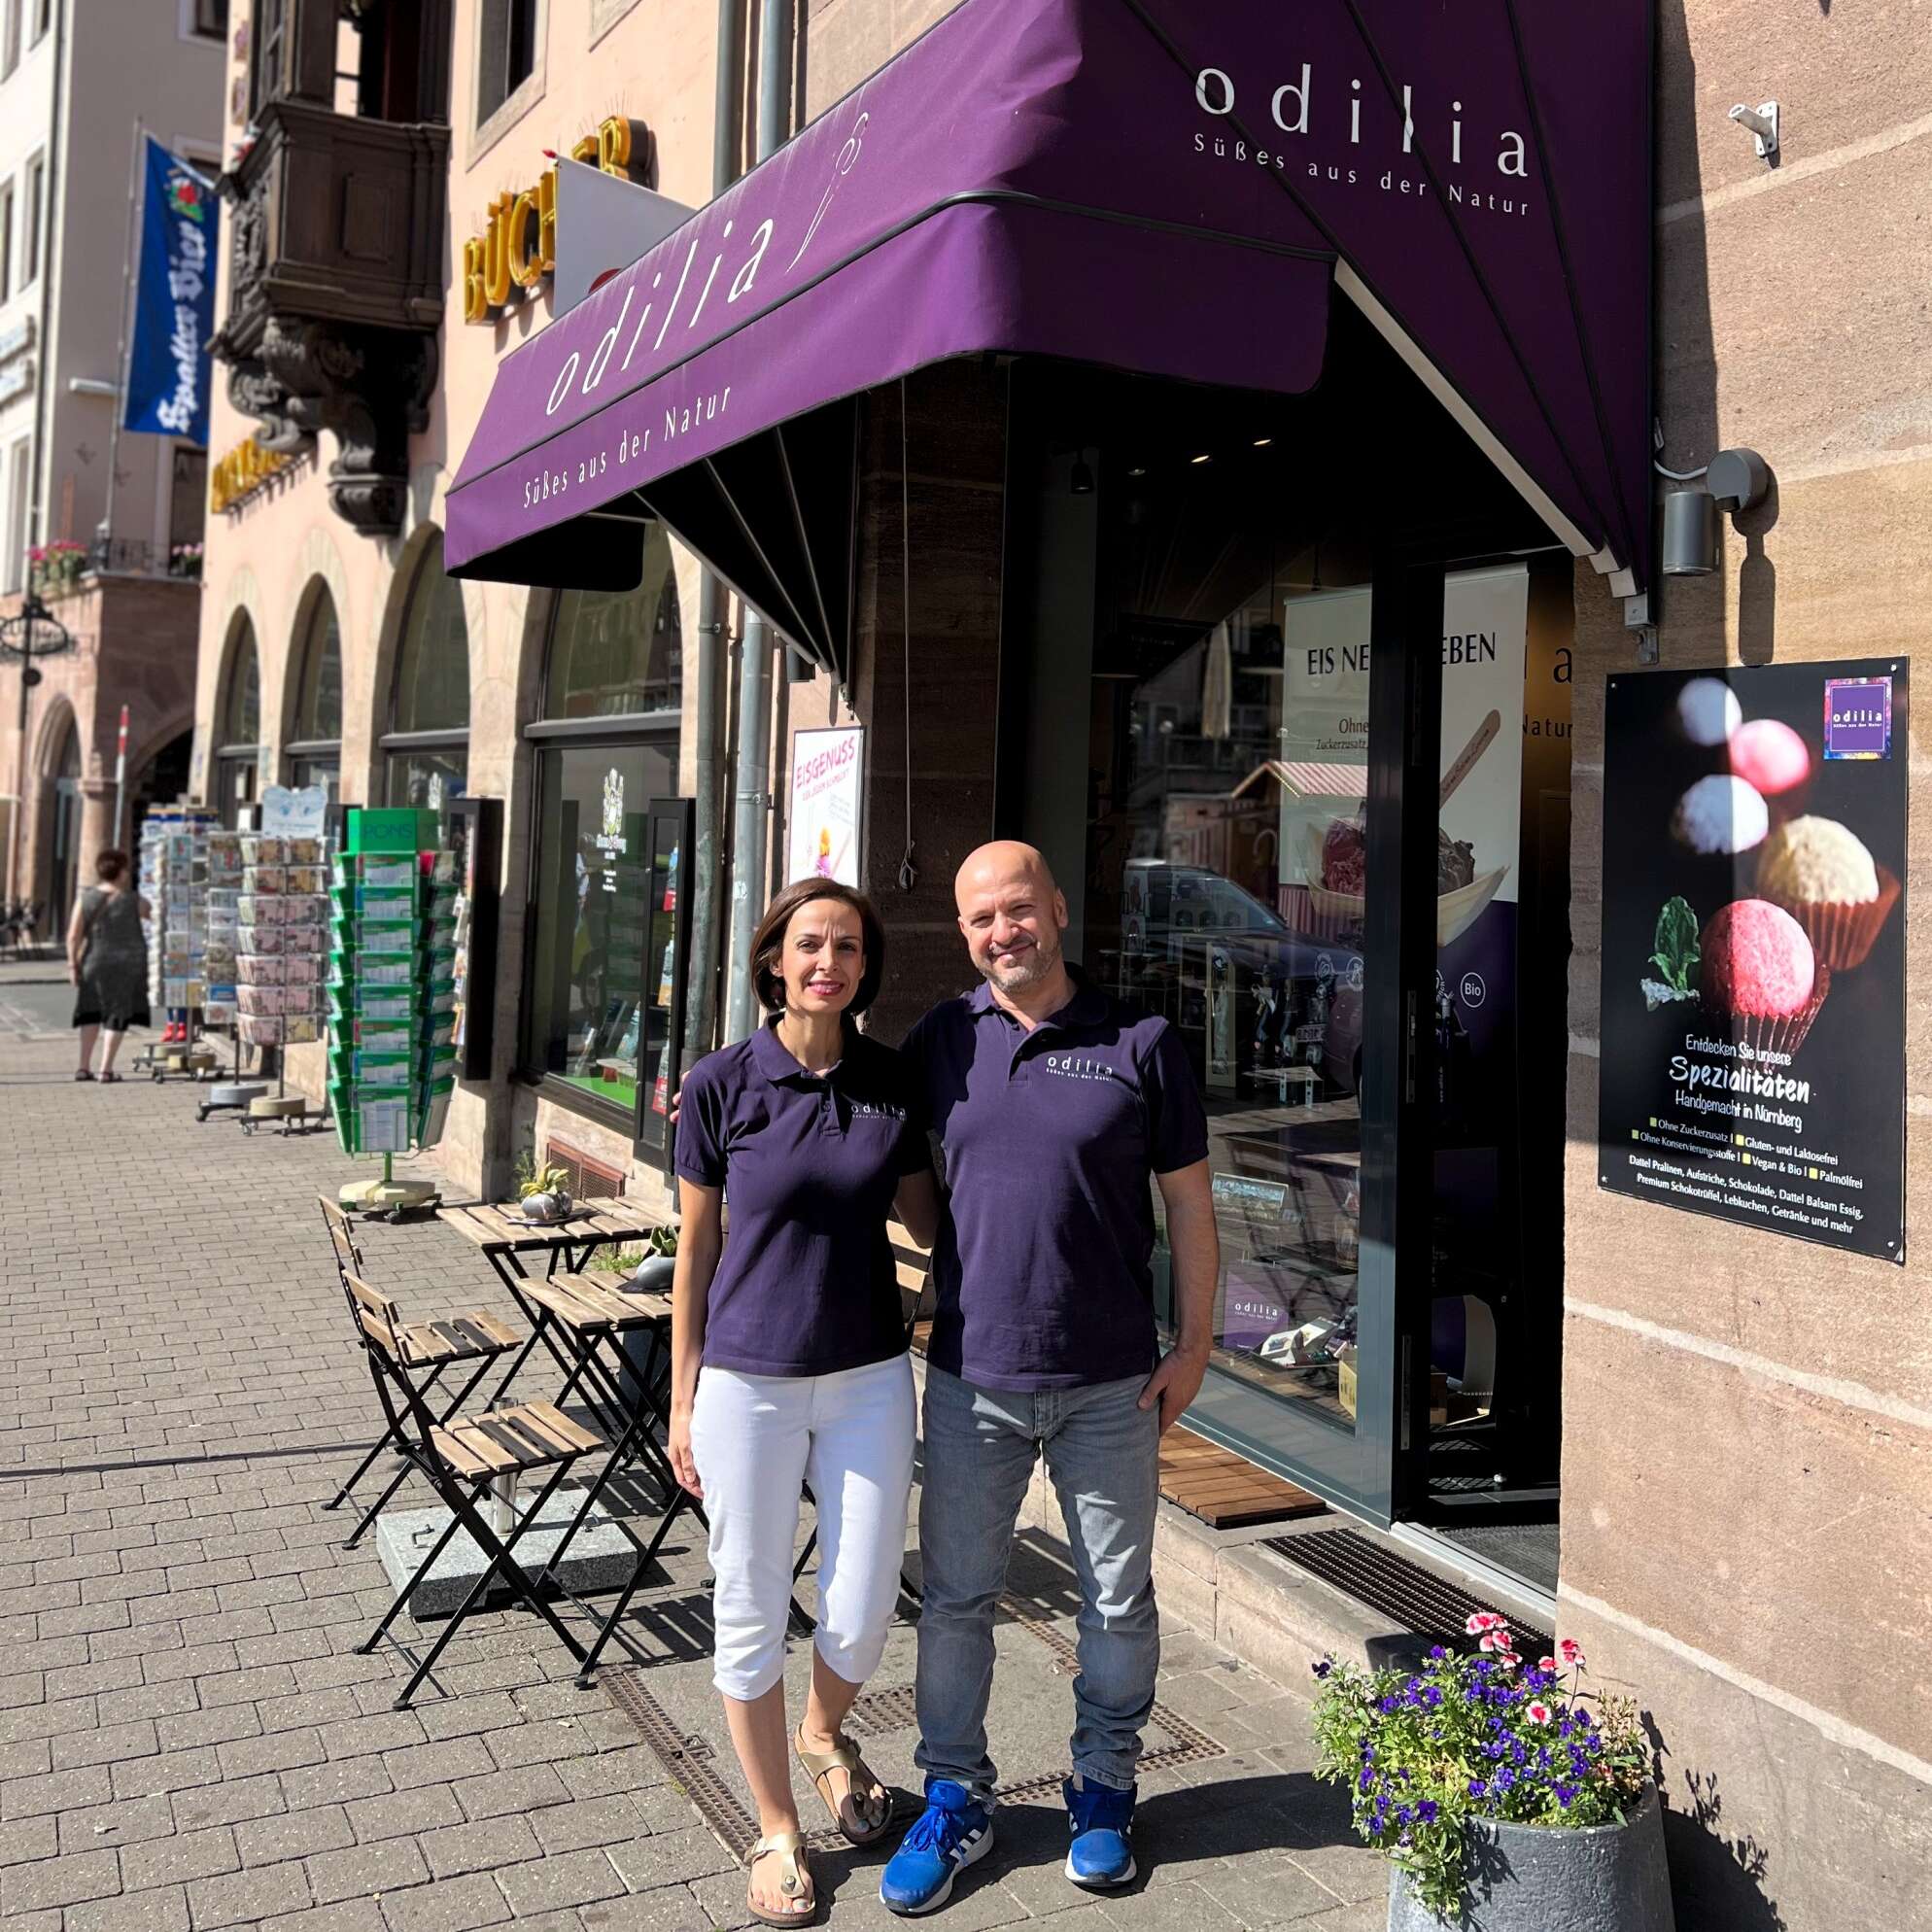 Esra visits Odilia